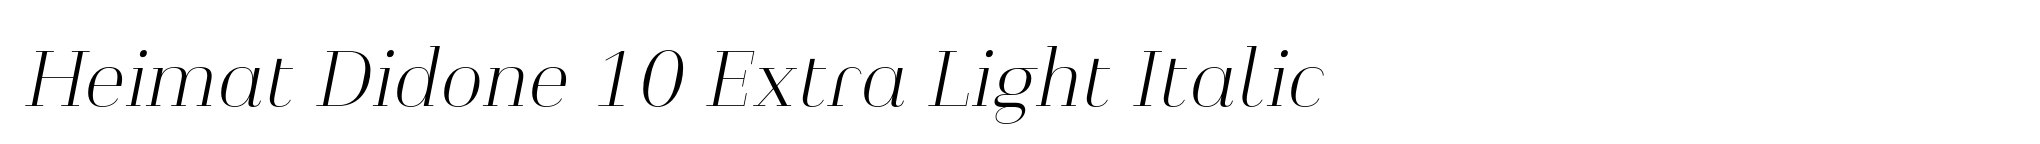 Heimat Didone 10 Extra Light Italic image